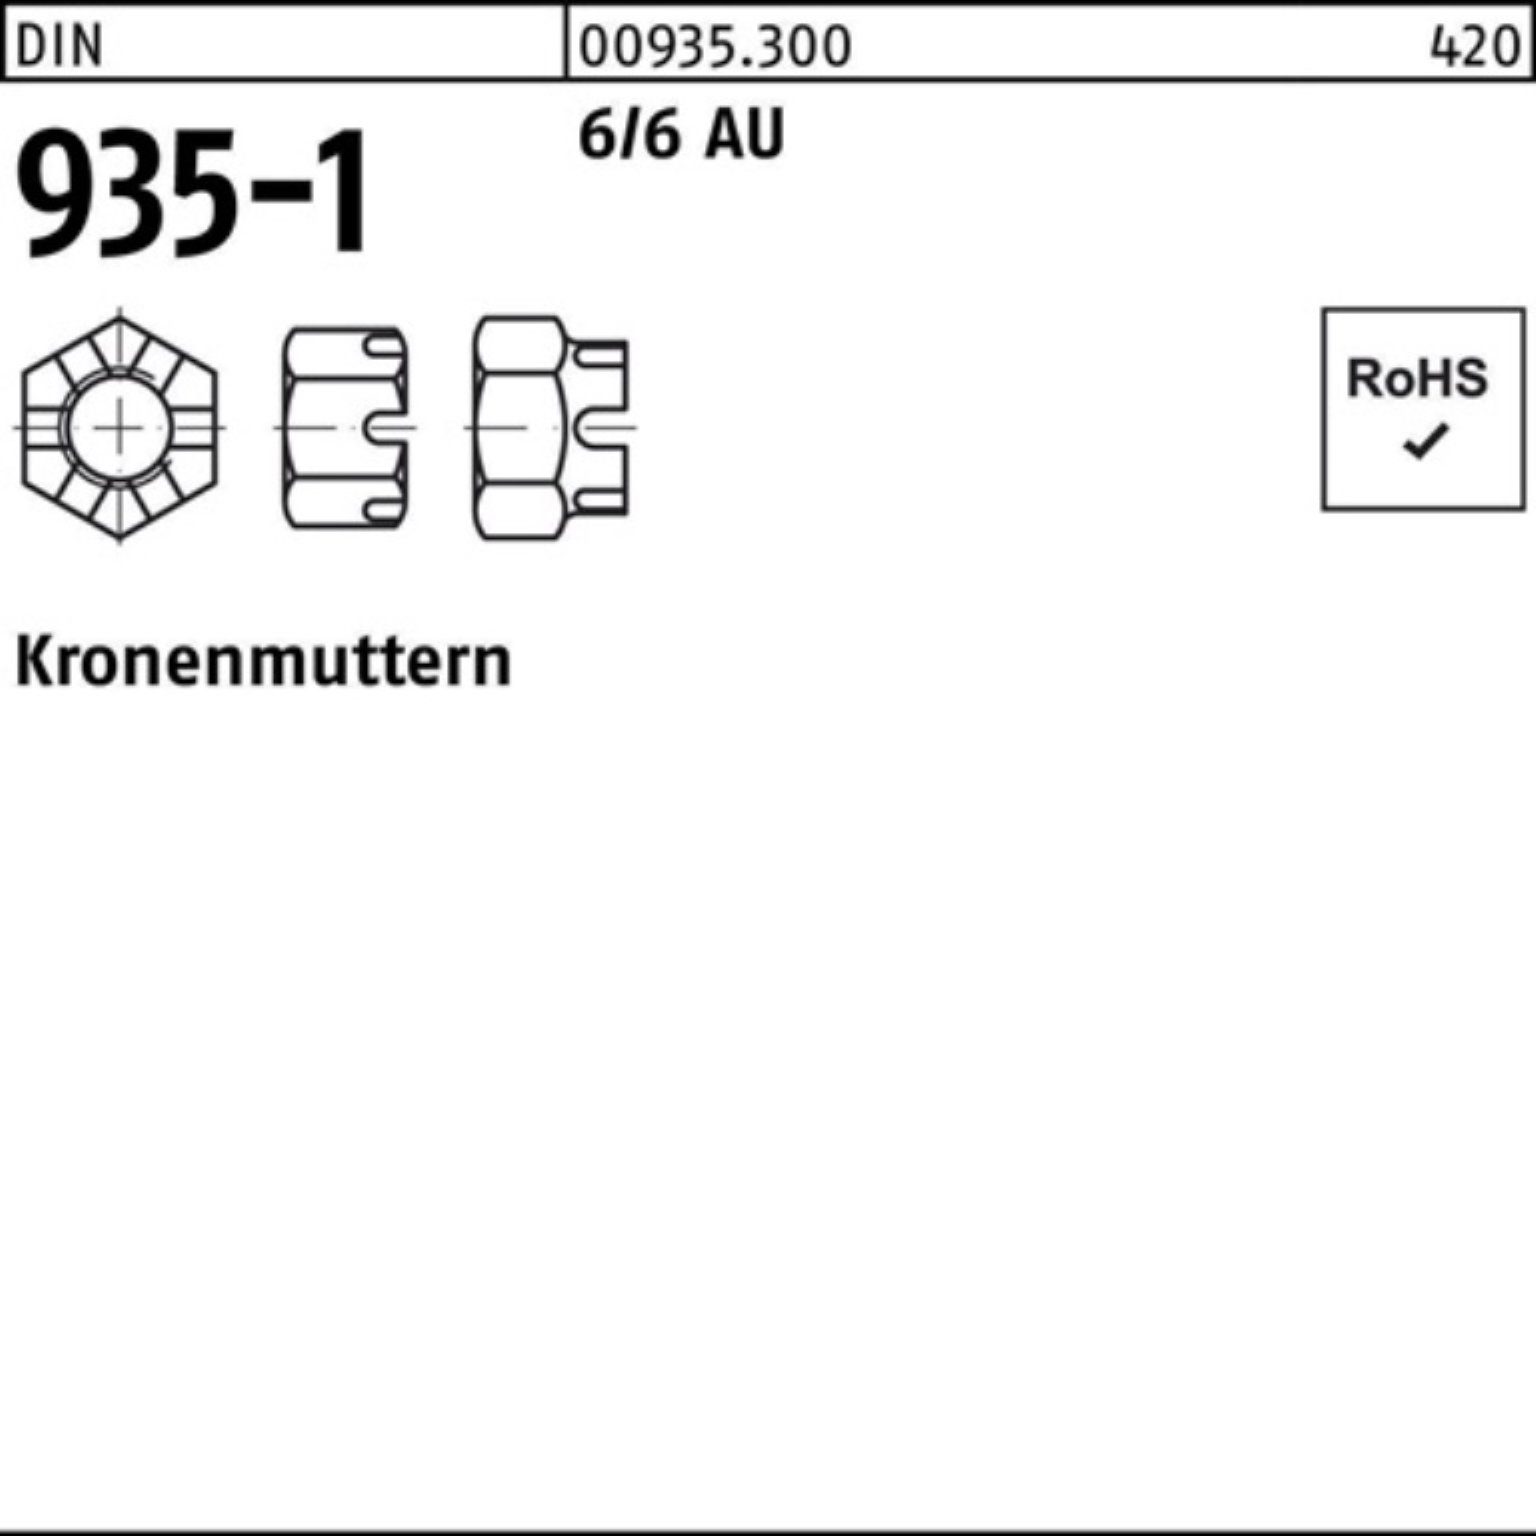 6/6 Pack DIN DI Reyher Kronenmutter 250er 935-1 250 Automatenstahl M16 Stück Kronenmutter